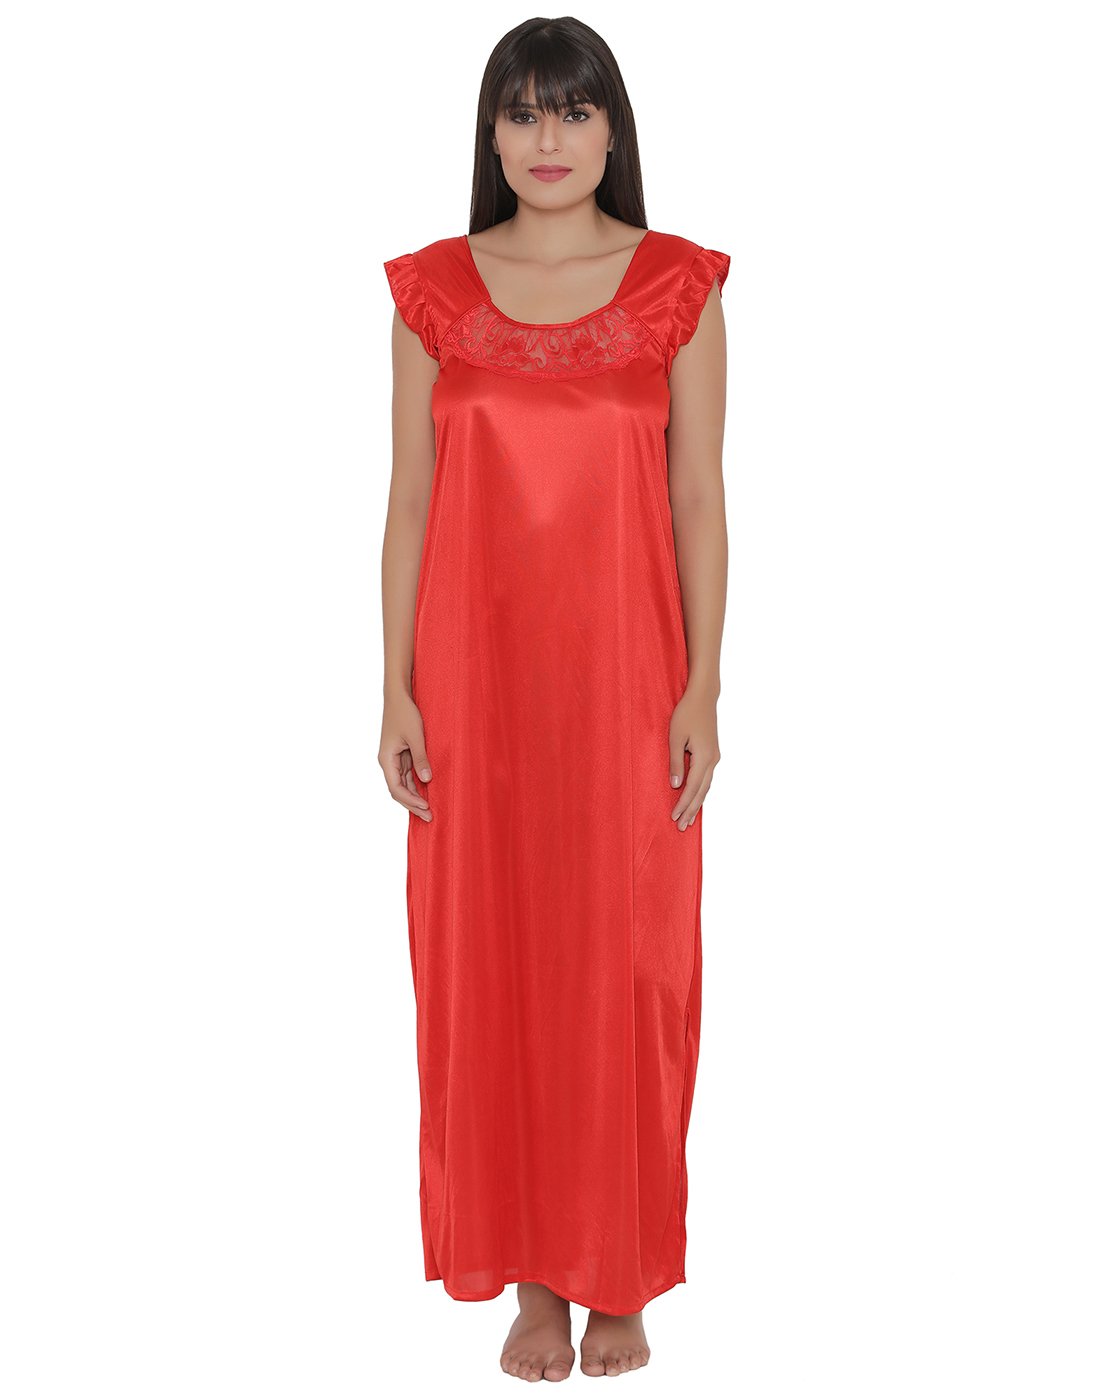 Satin Night Dress with Lace Neckline